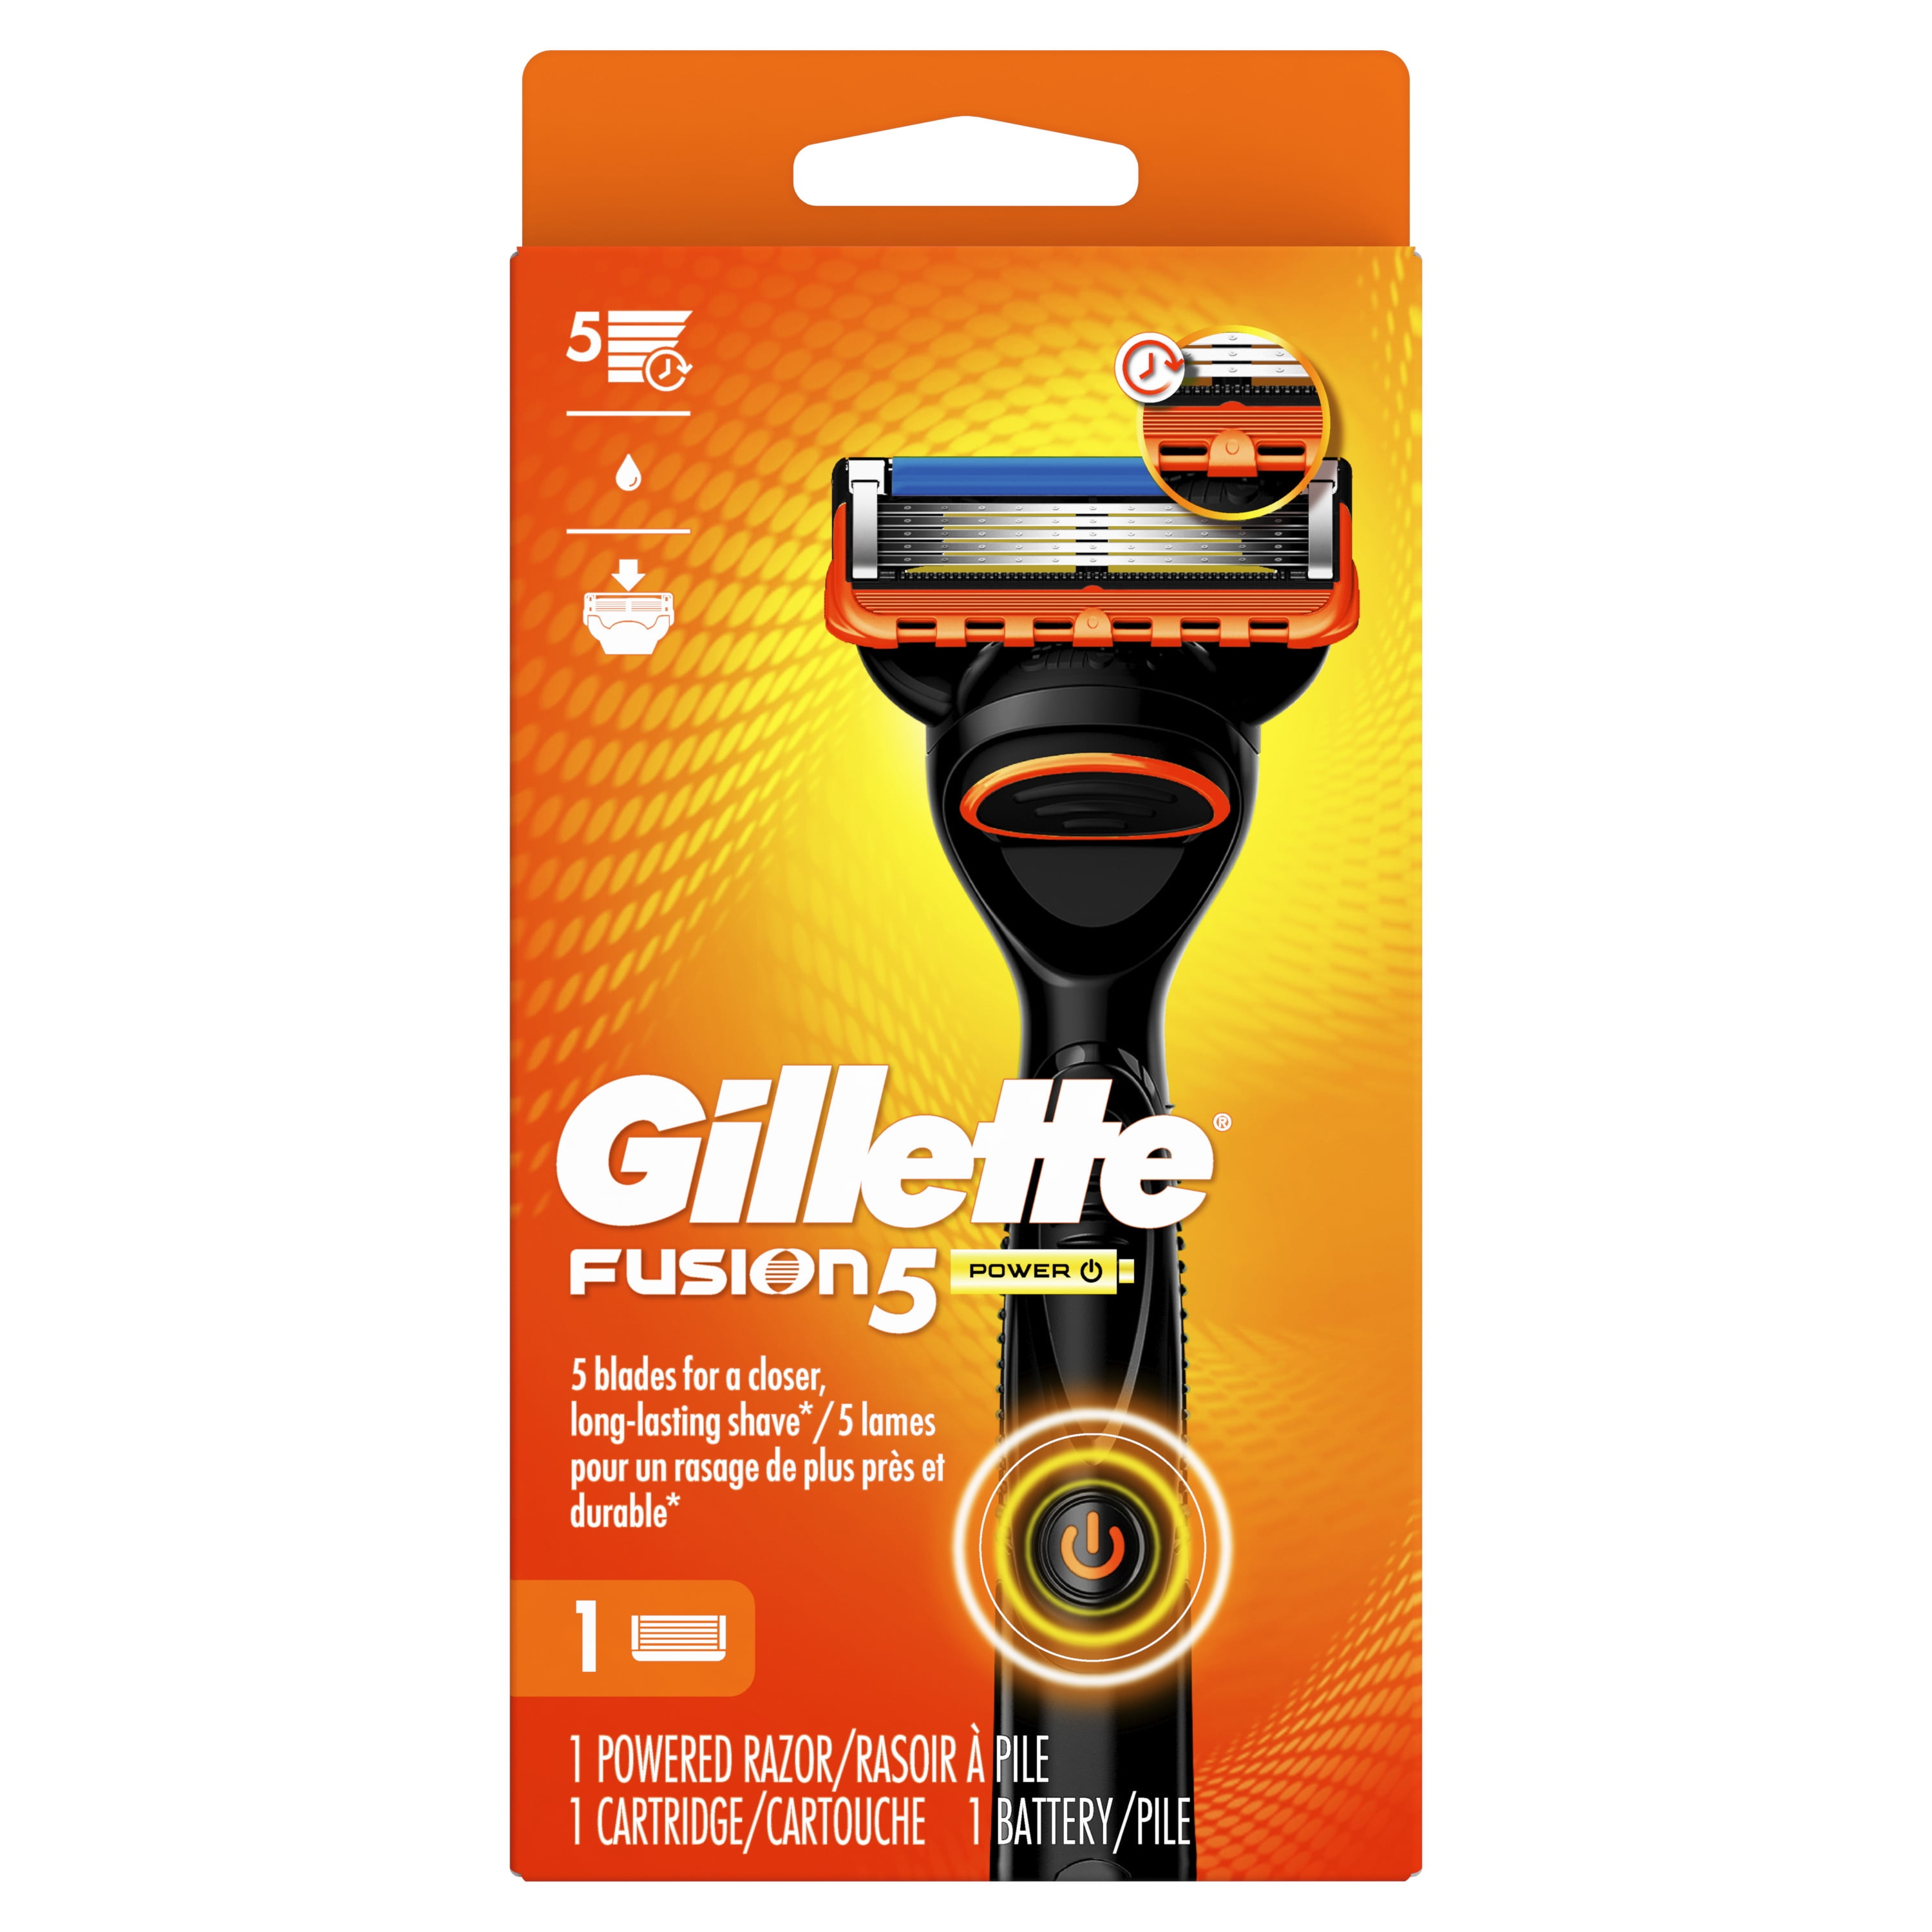 Aske pessimist Microbe Gillette Fusion5 Power Men's Razor Handle, Orange, 1 Blade Refill -  Walmart.com